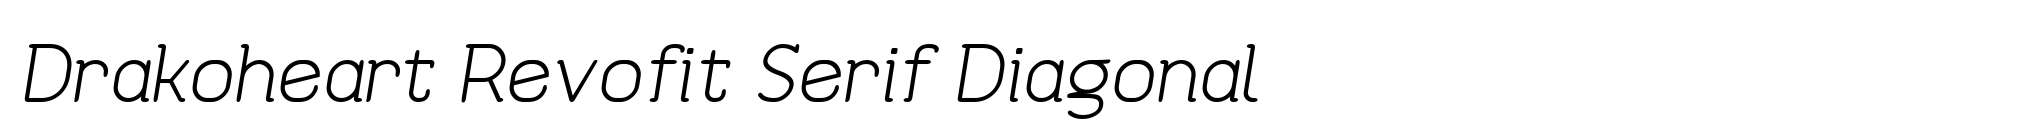 Drakoheart Revofit Serif Diagonal image